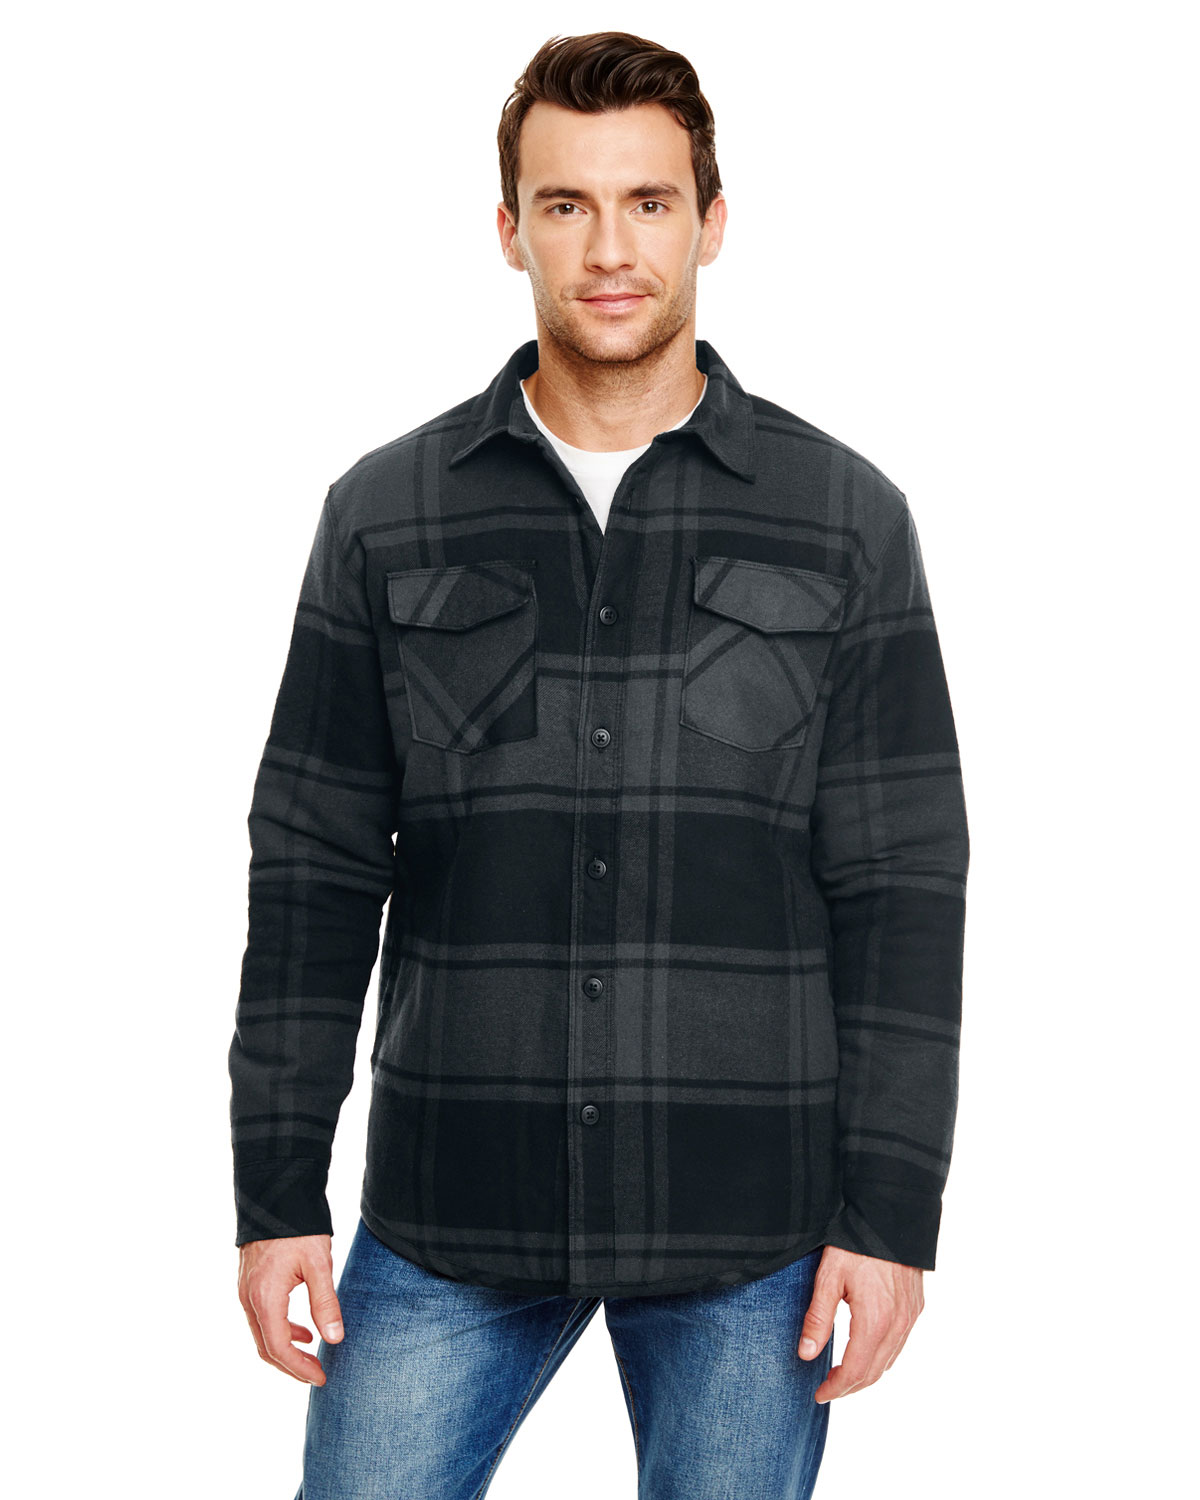 Burnside® B8610 Quilted Flannel Jacket